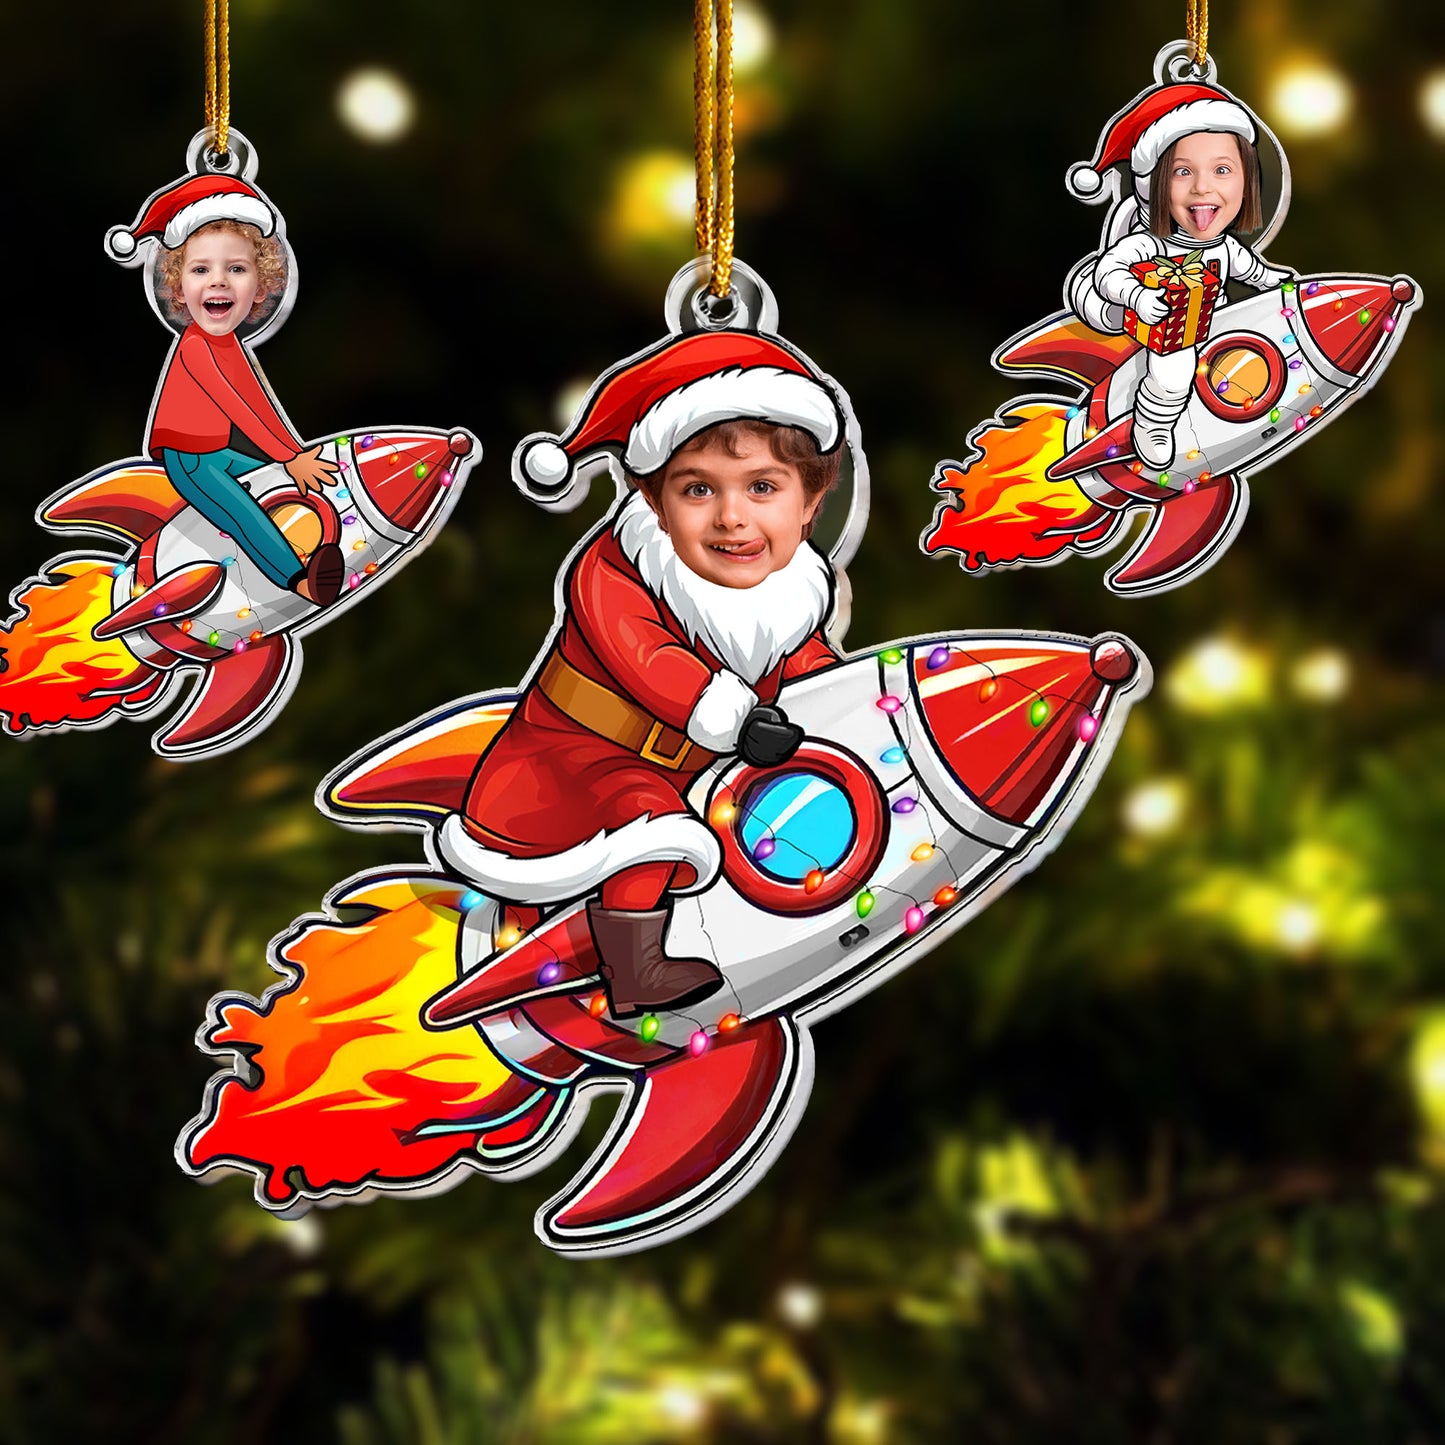 Kid Riding Rocket - Personalized Acrylic Photo Ornament